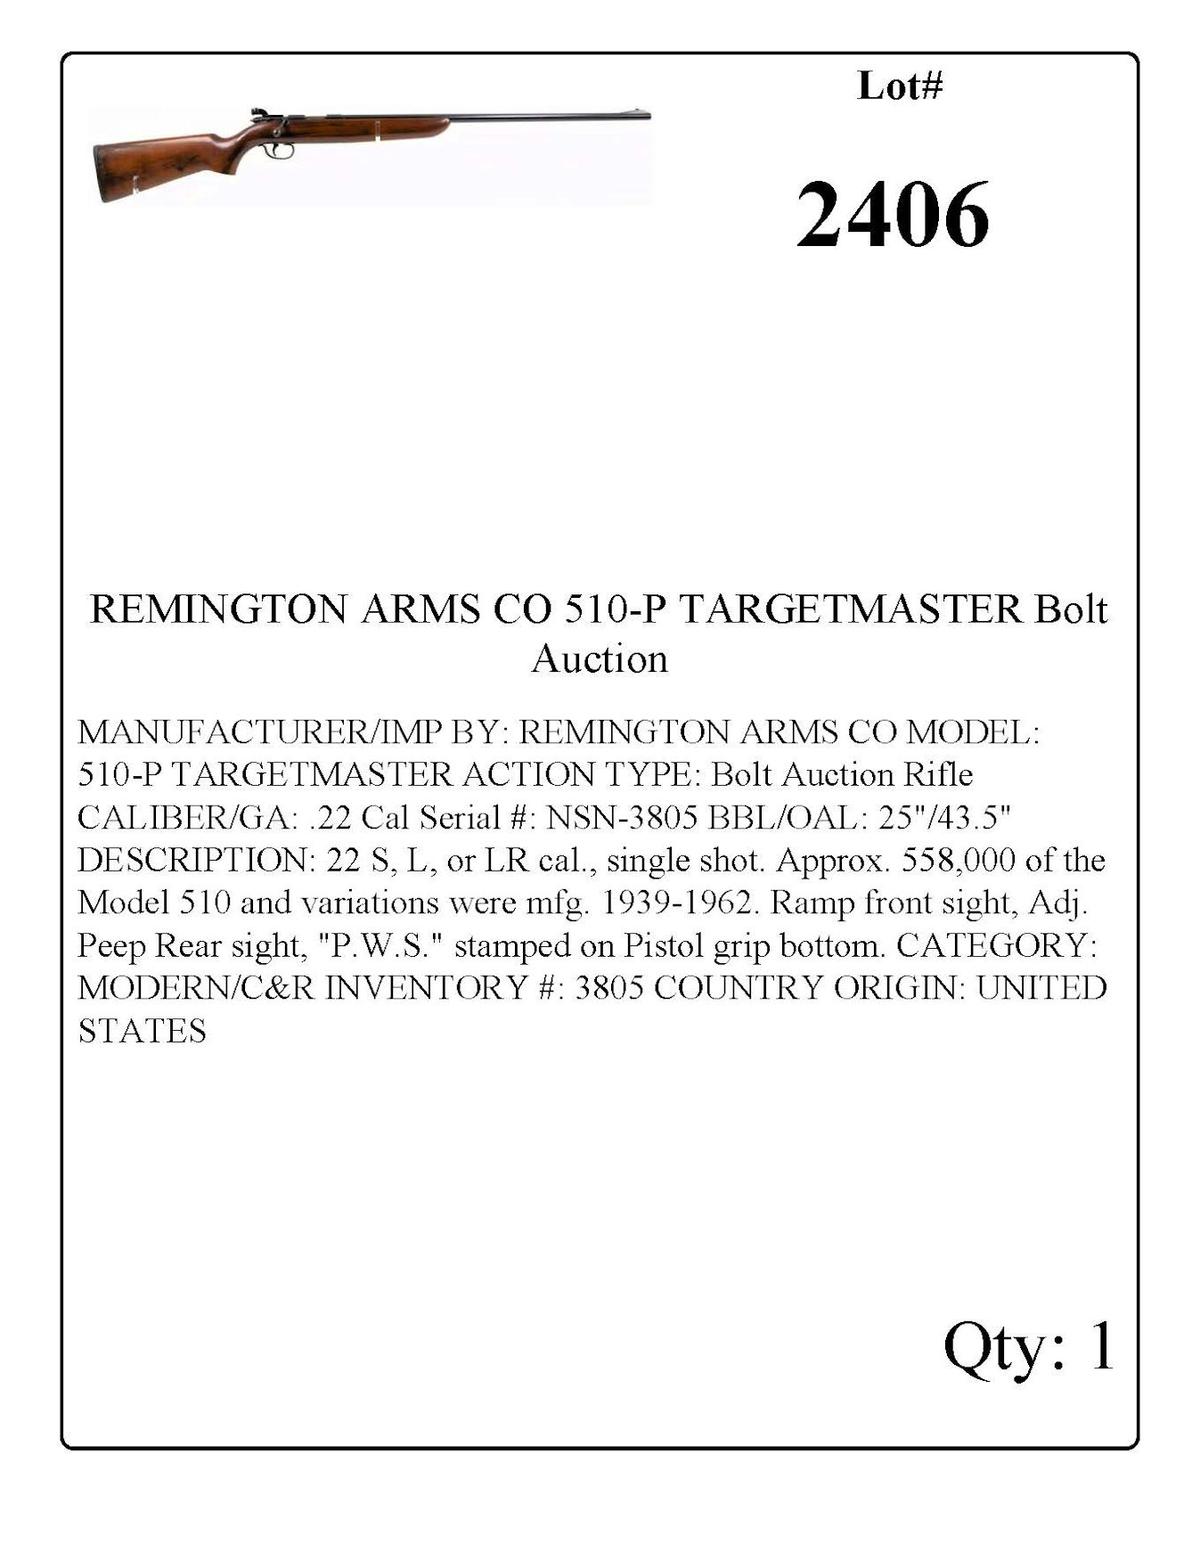 REMINGTON ARMS CO 510-P TARGETMASTER Bolt Action Rifle